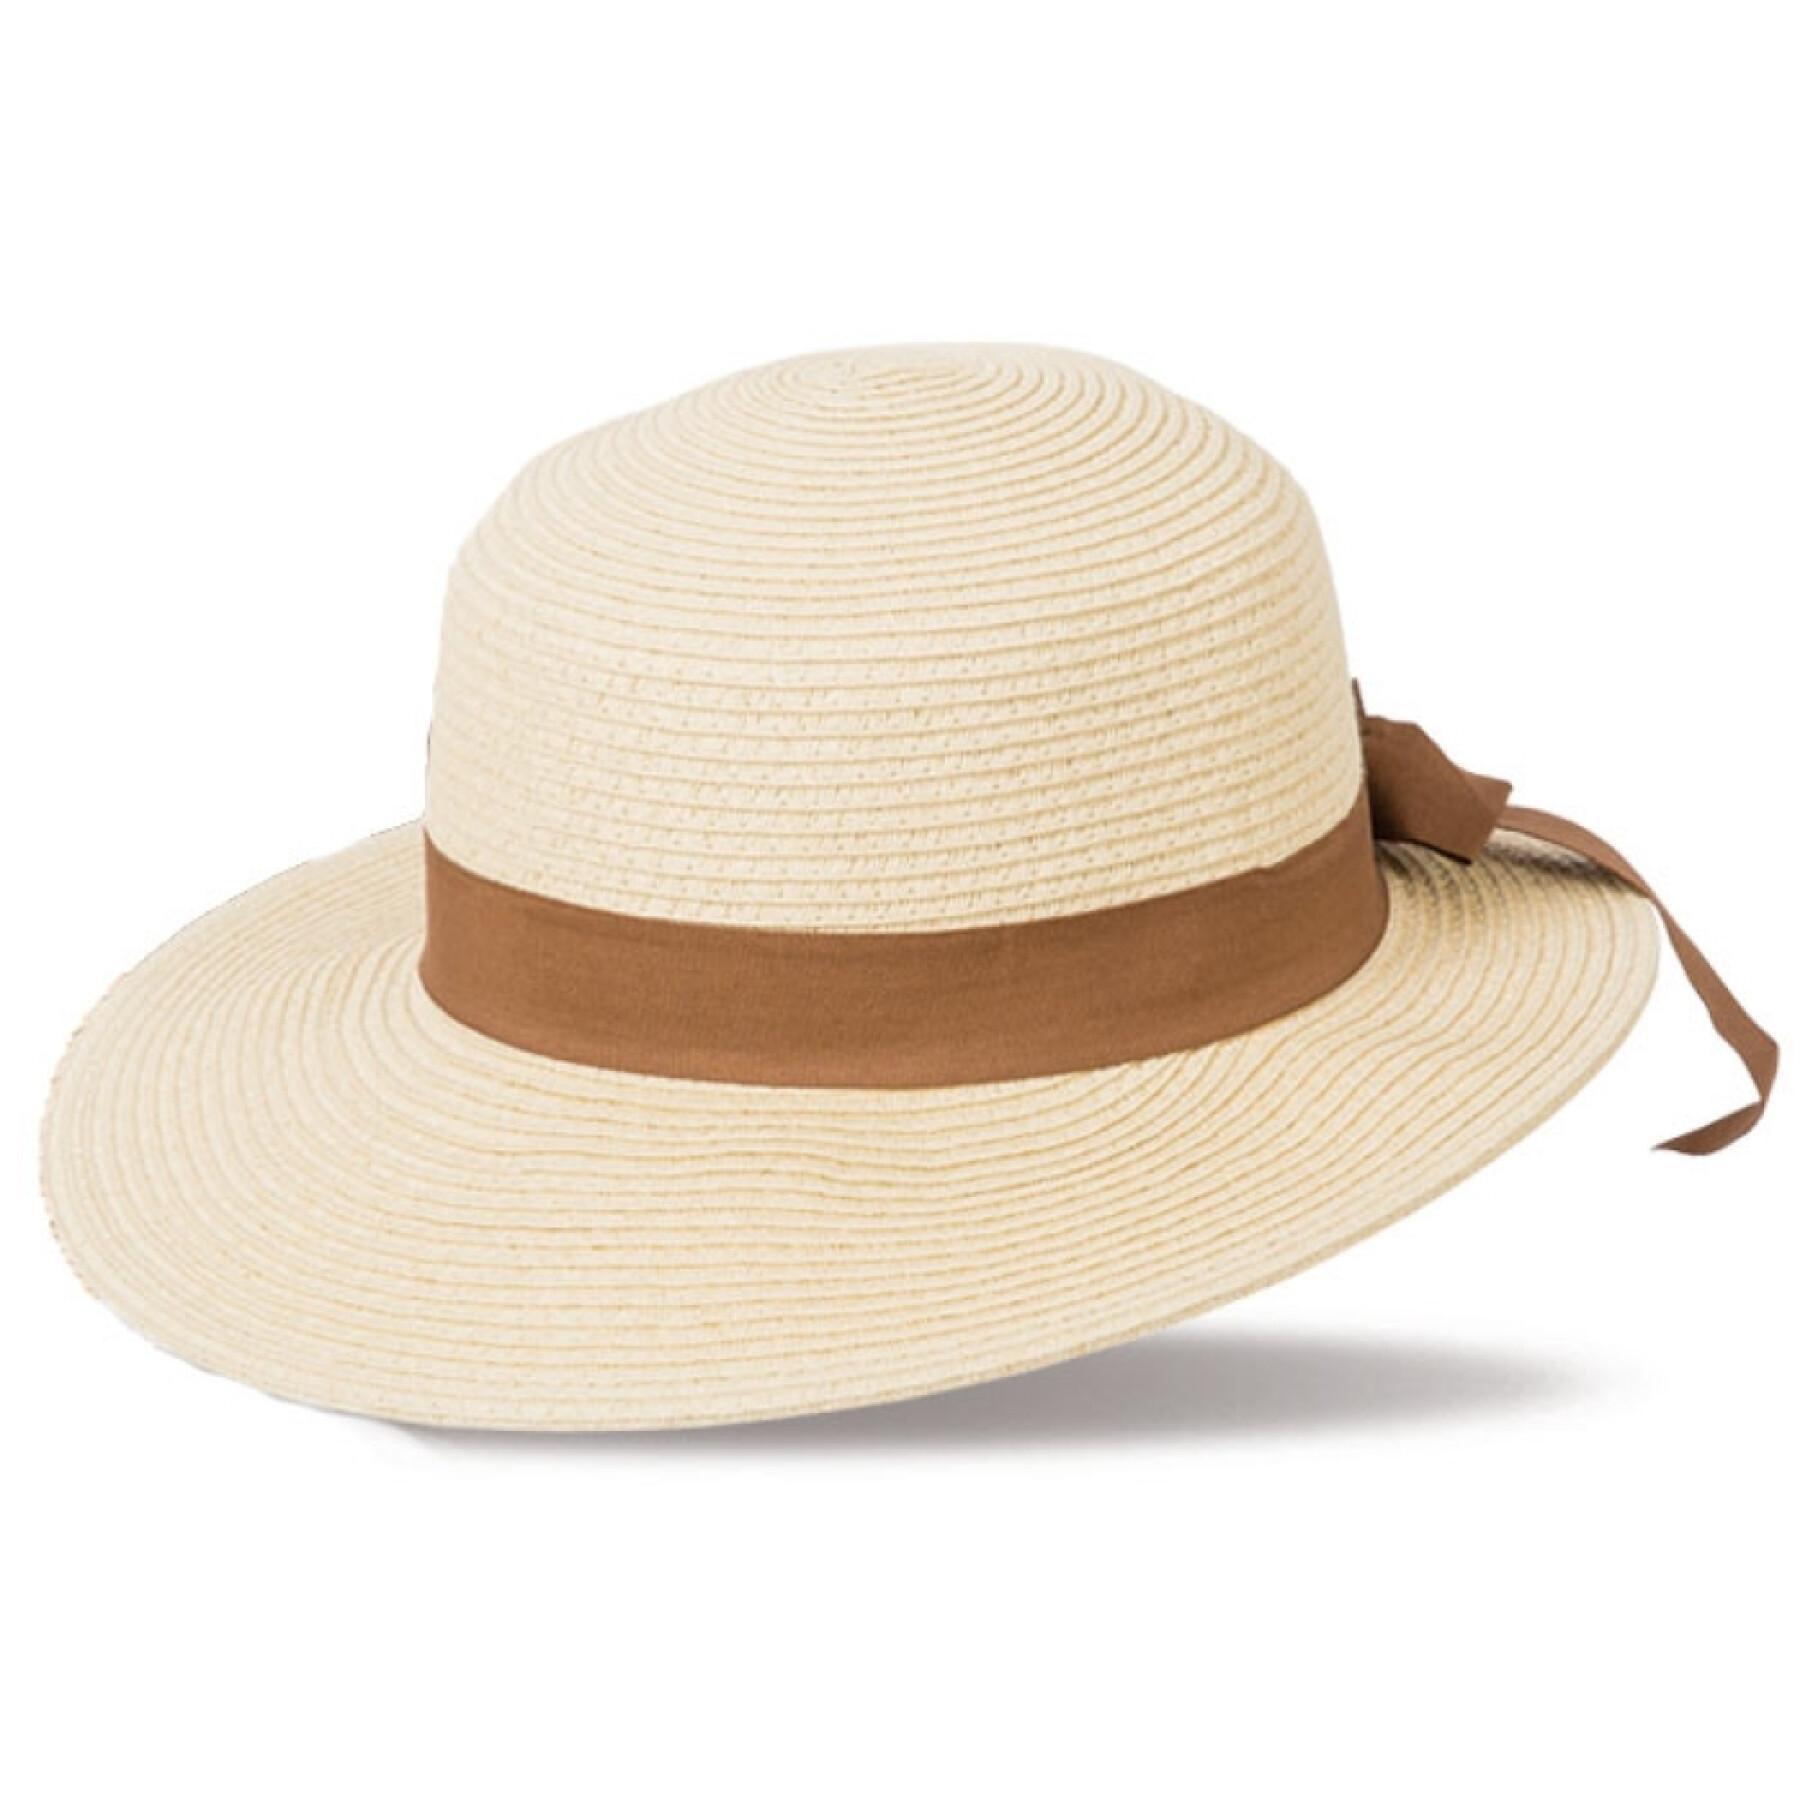 3-tone hat for women Solid Pamela